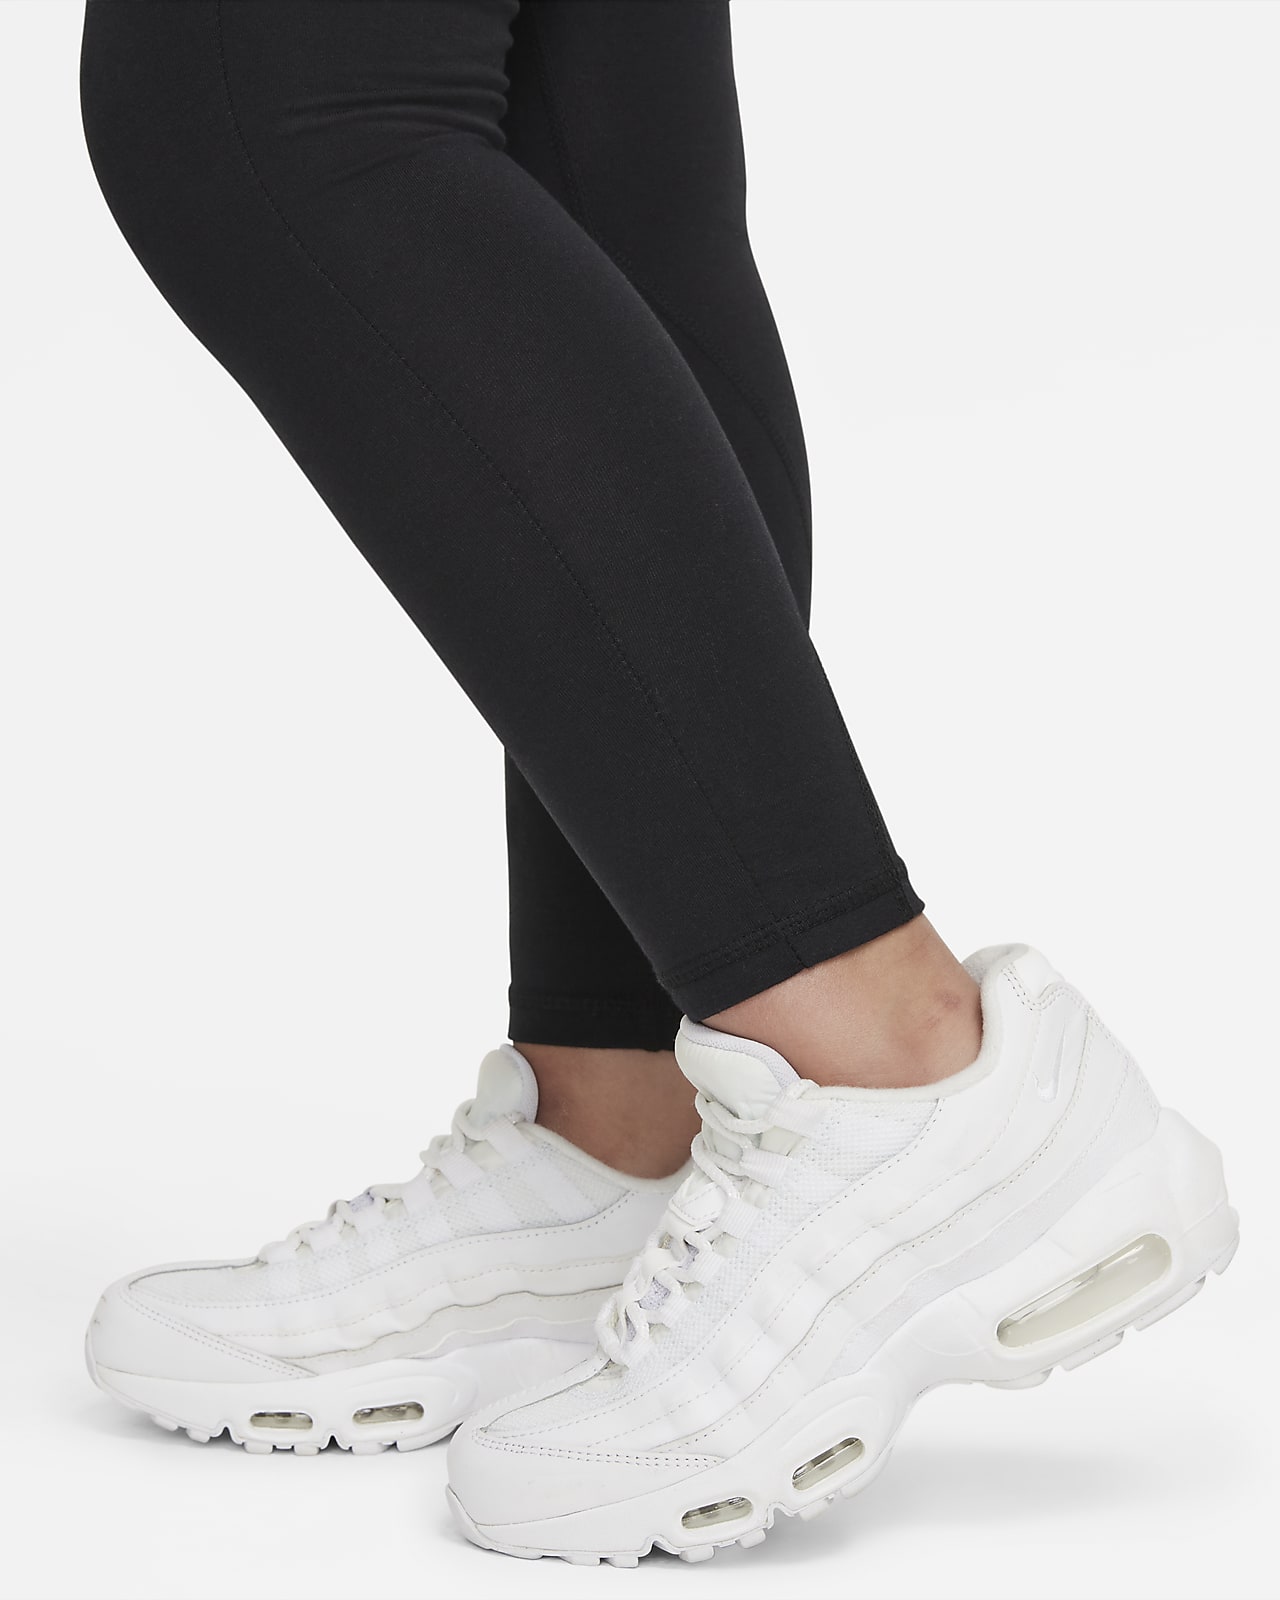 Legging taille haute Nike Sportswear Club pour Femme